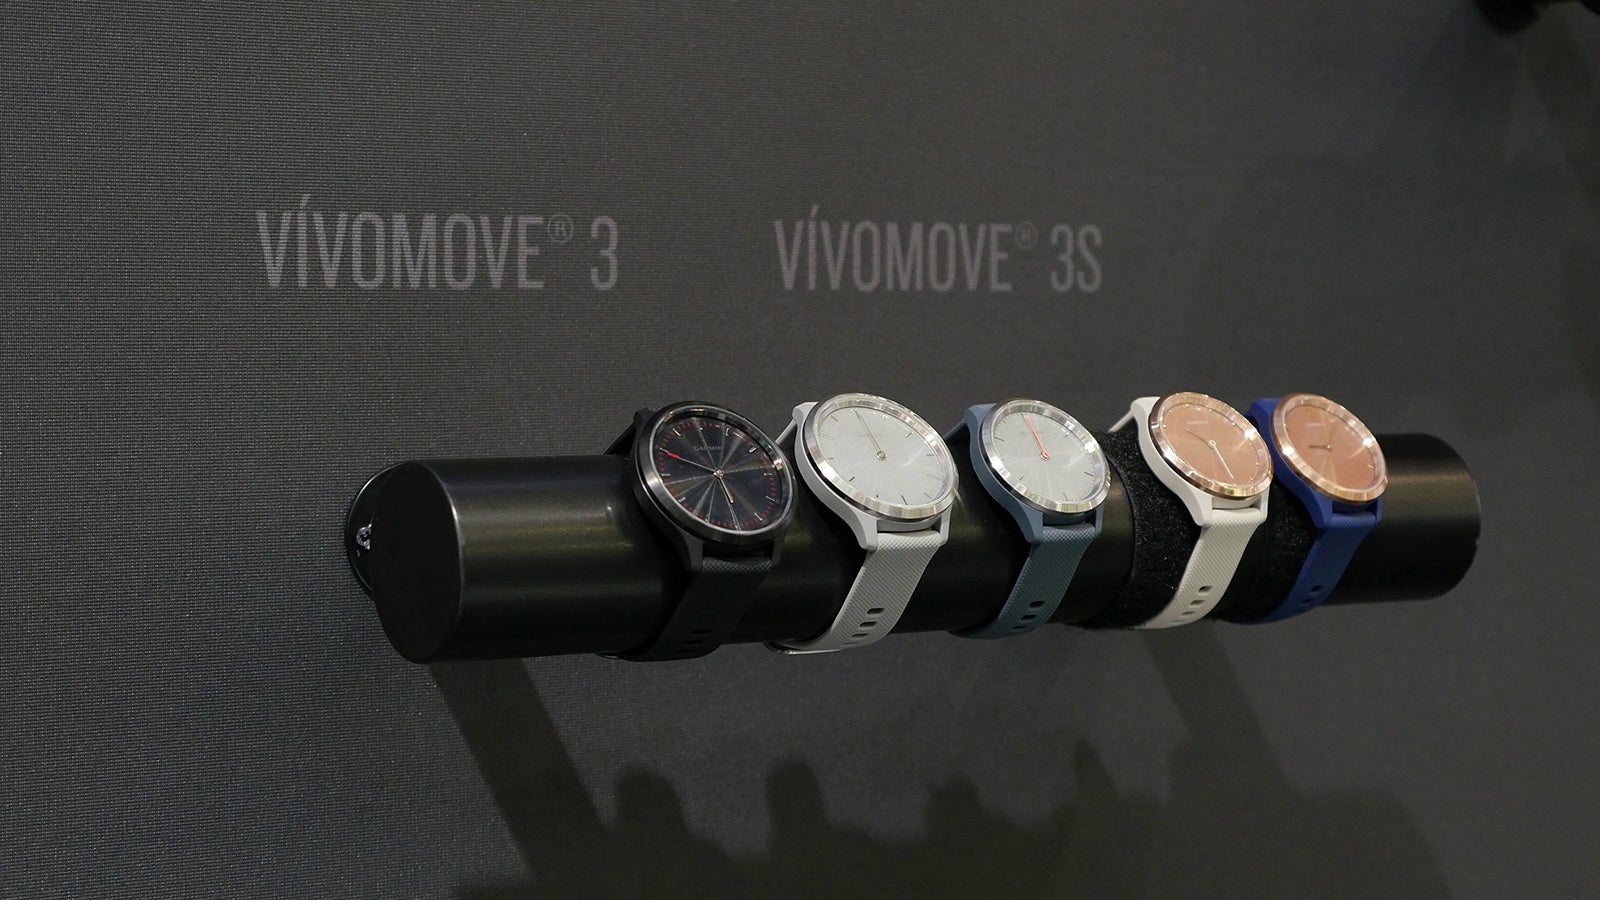 Vivomove 3S - Garmin Vivomove 3 series: an incredibly classy watch with a hidden smart display (hands-on)